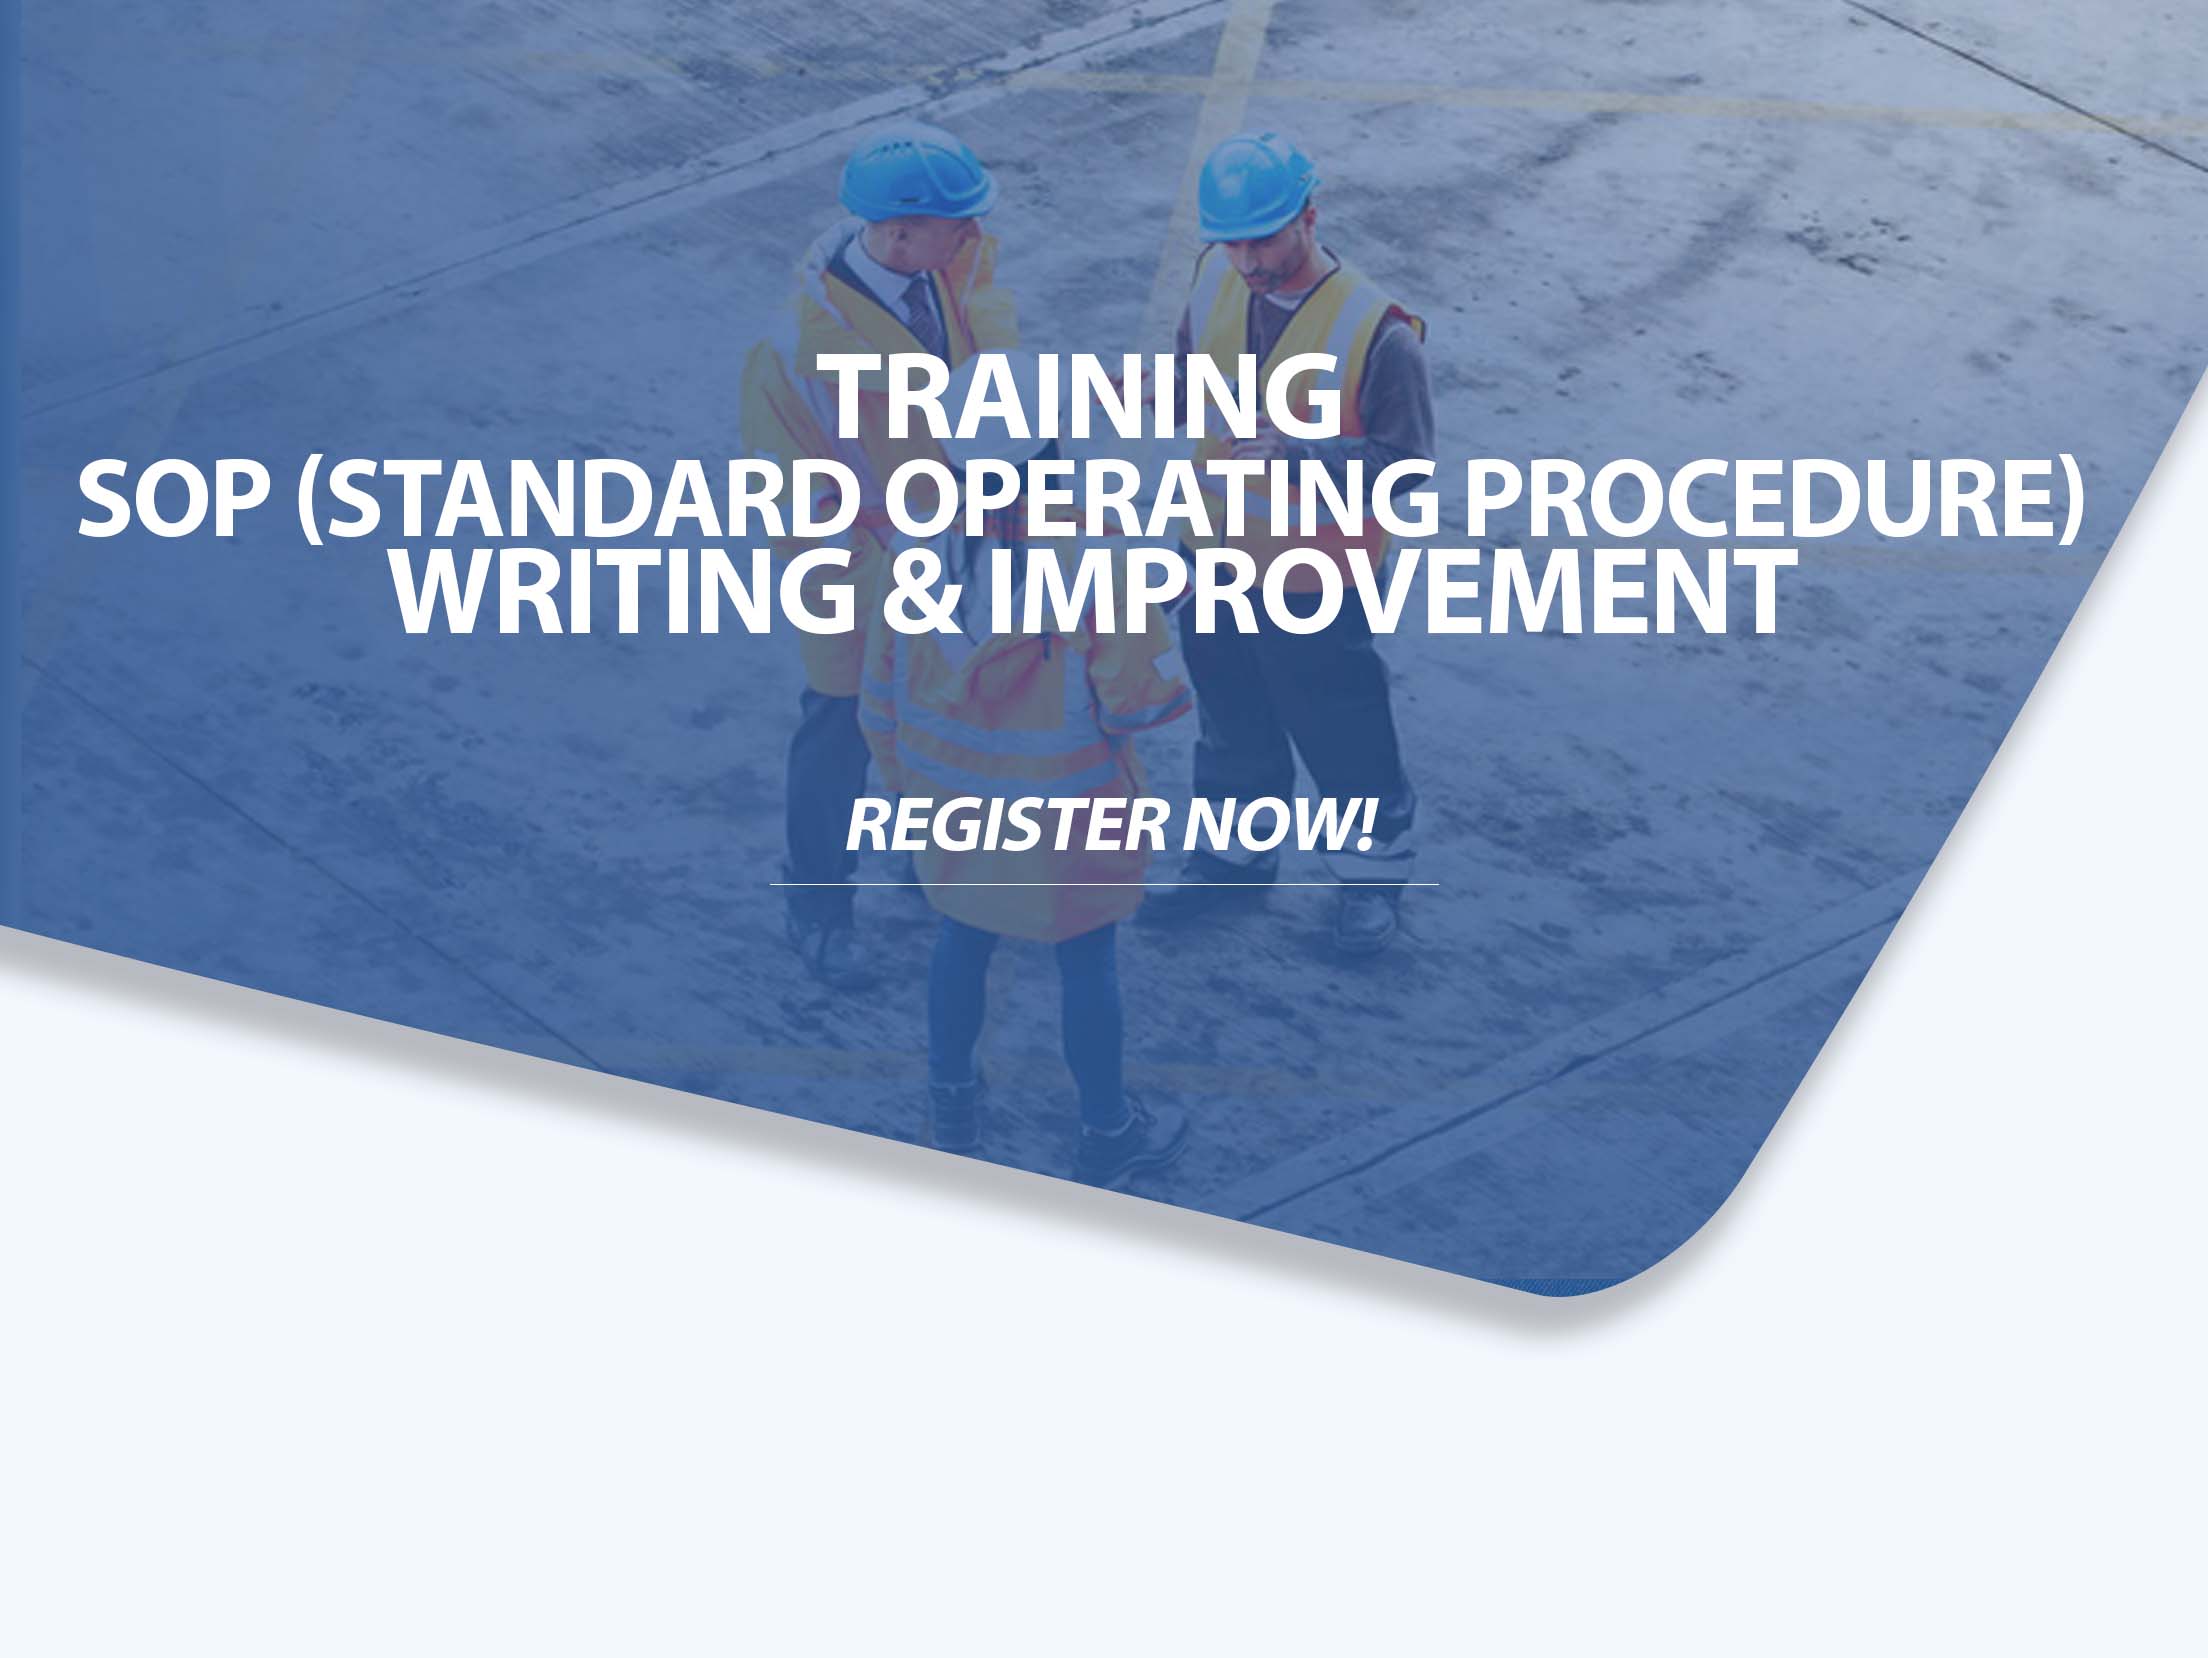 Training SOP (Standard Operating Procedure) Writing & Improvement